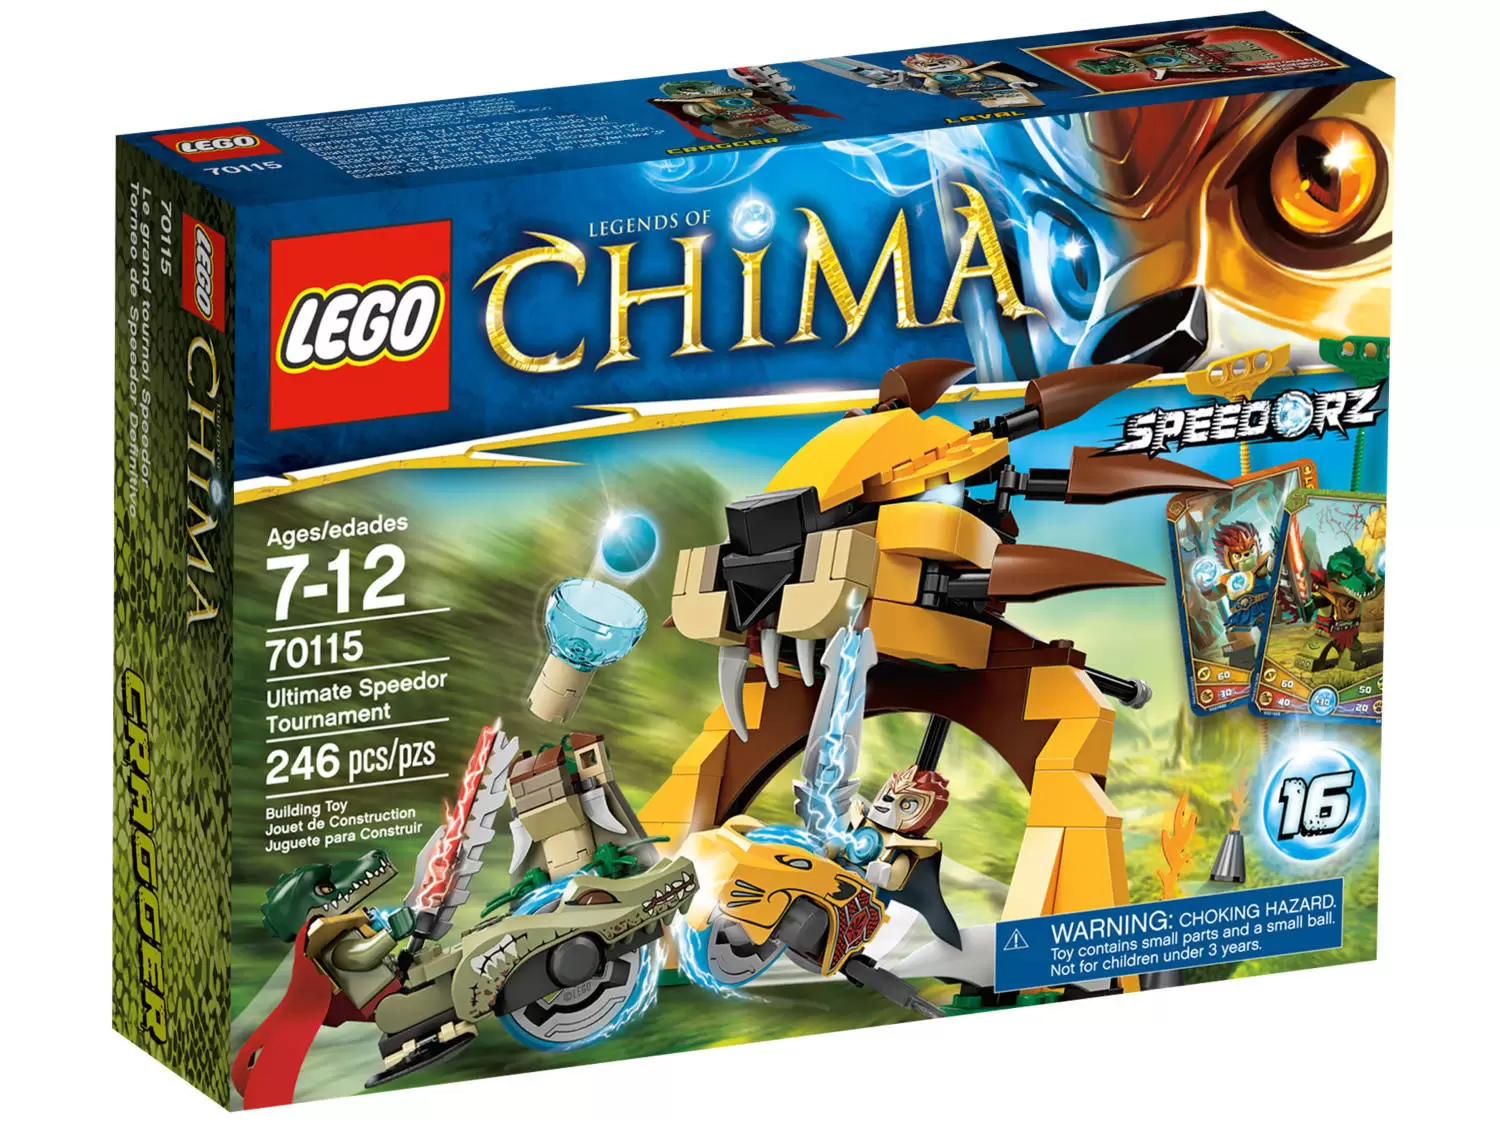 LEGO Legends of Chima - Ultimate Speedor Tournament